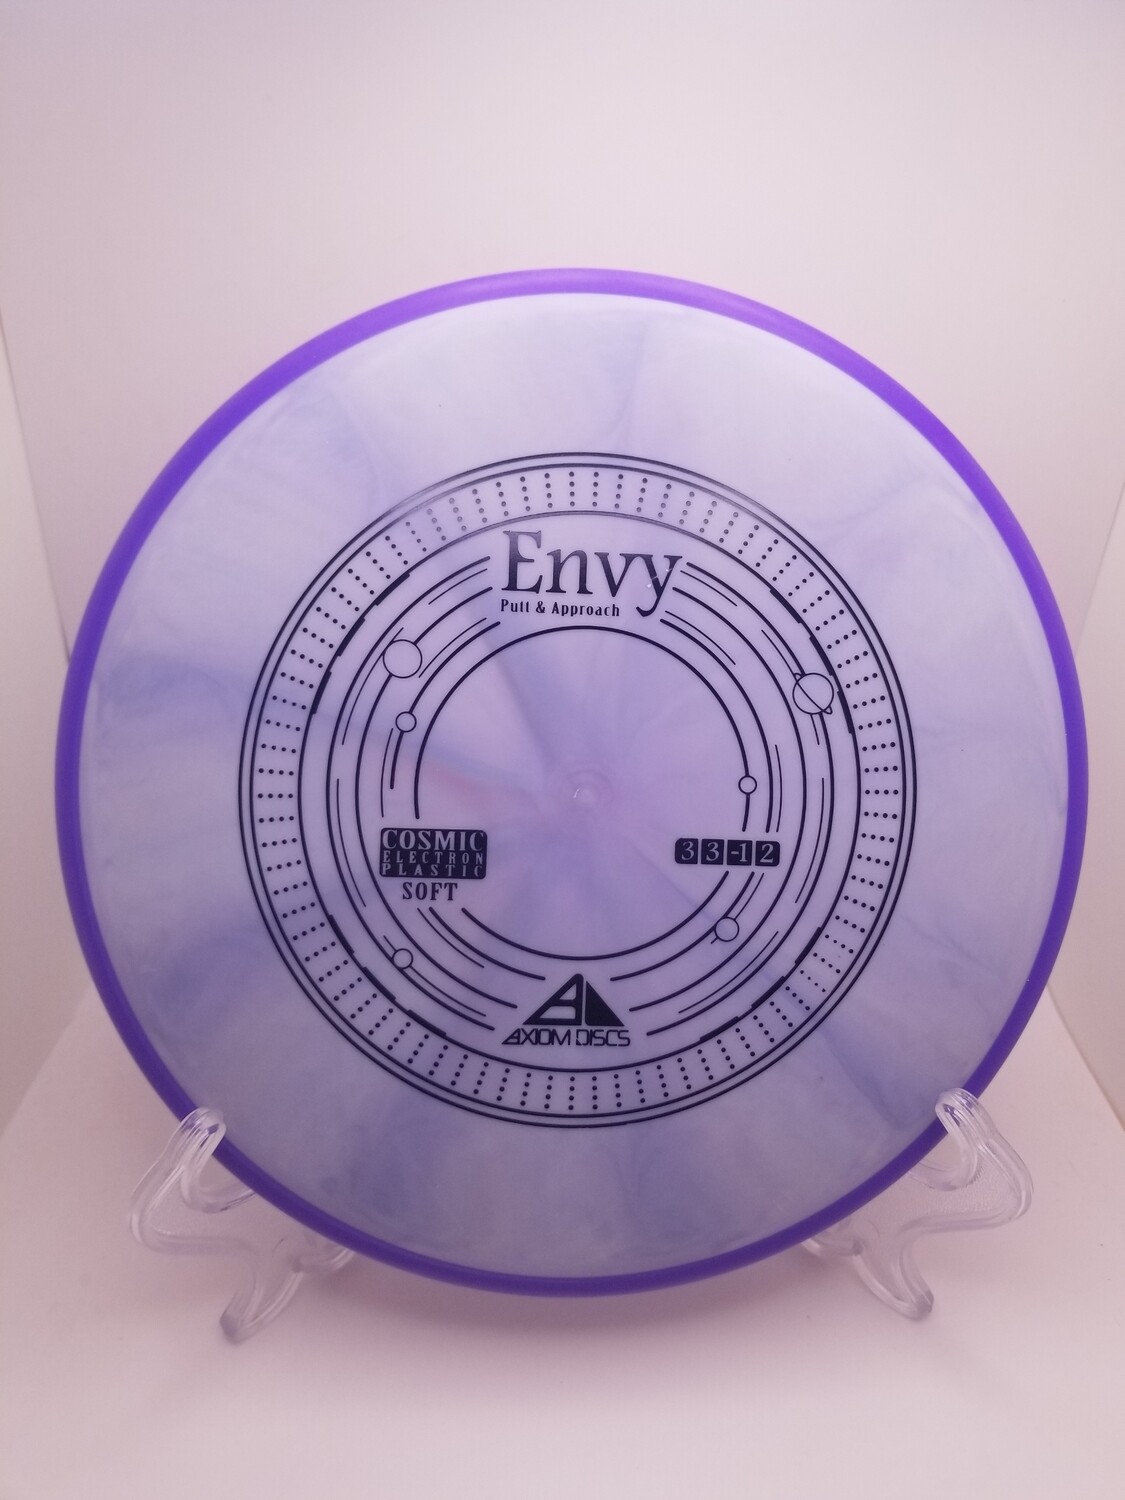 Axiom Discs Envy Greyish/Blue Swirl with Purple Rim Cosmic Electron Plastic Soft 174g